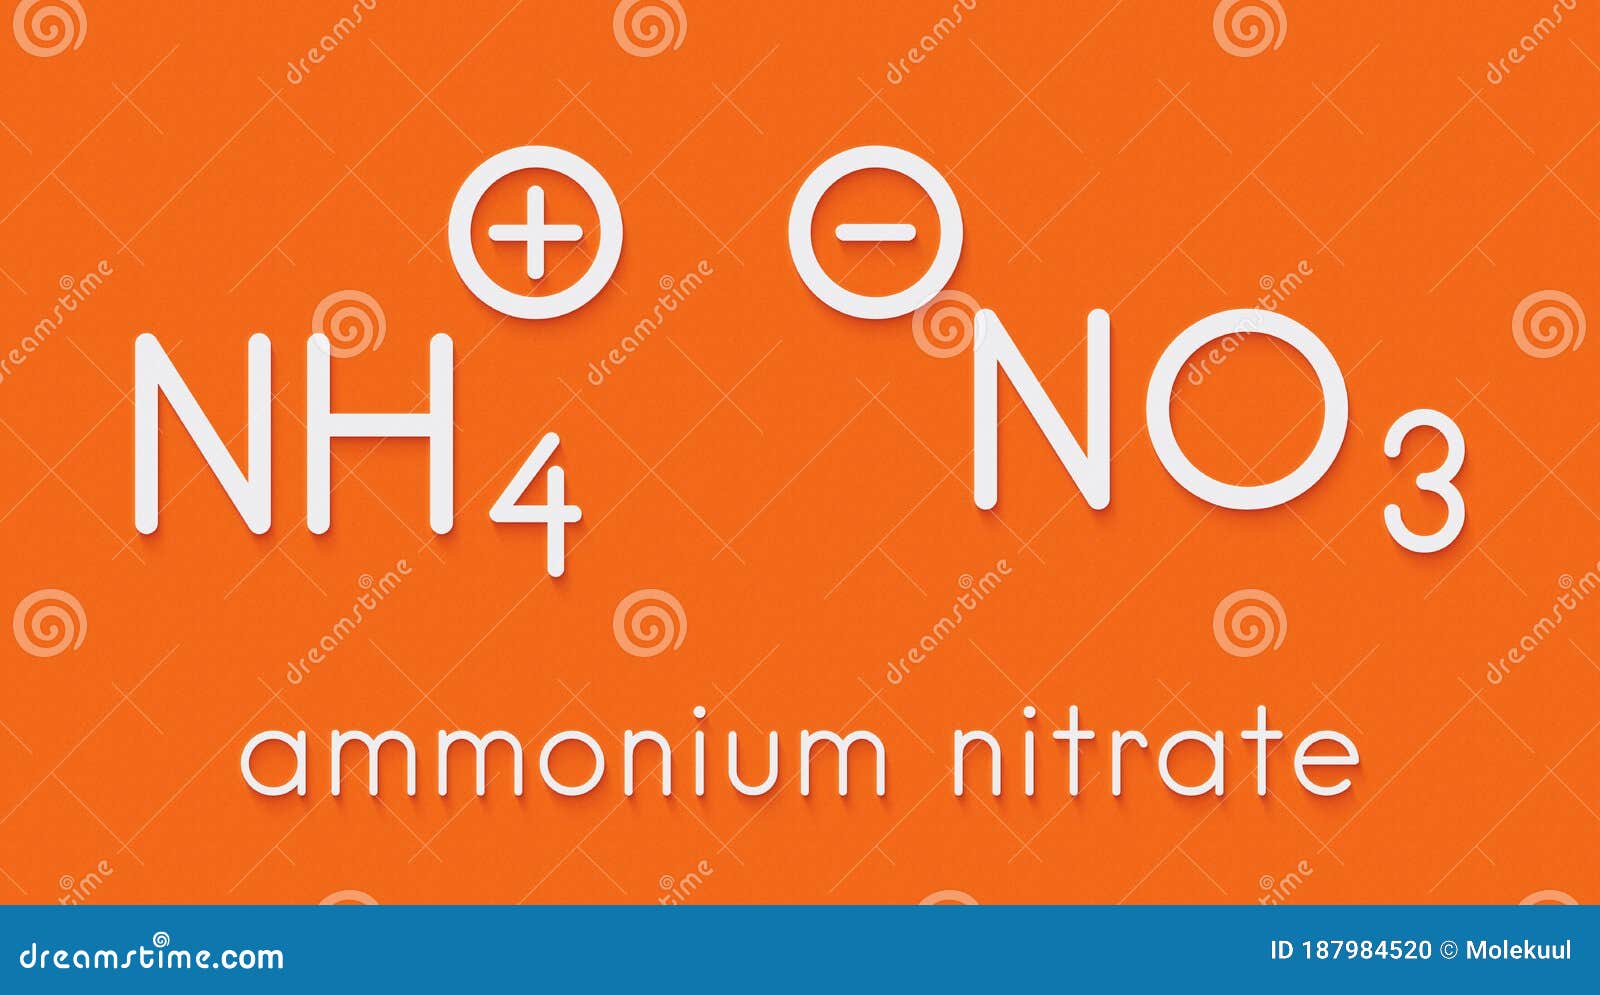 Ammonium nitrate formula